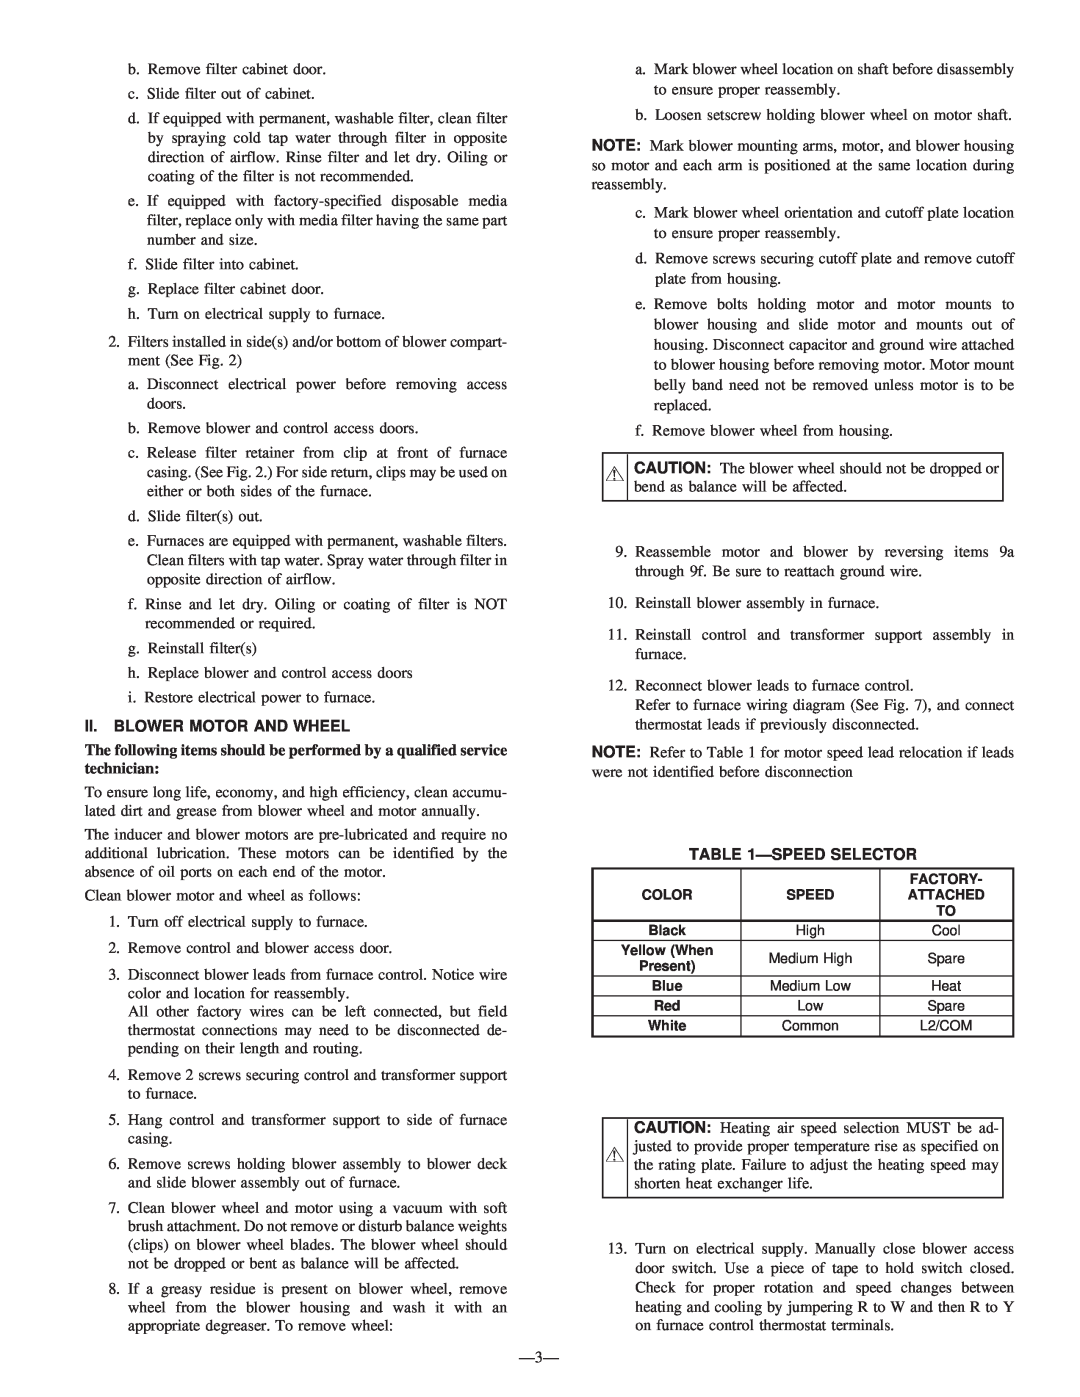 Bryant 393AAV instruction manual Ii.Blower Motor And Wheel, Ðspeed Selector 